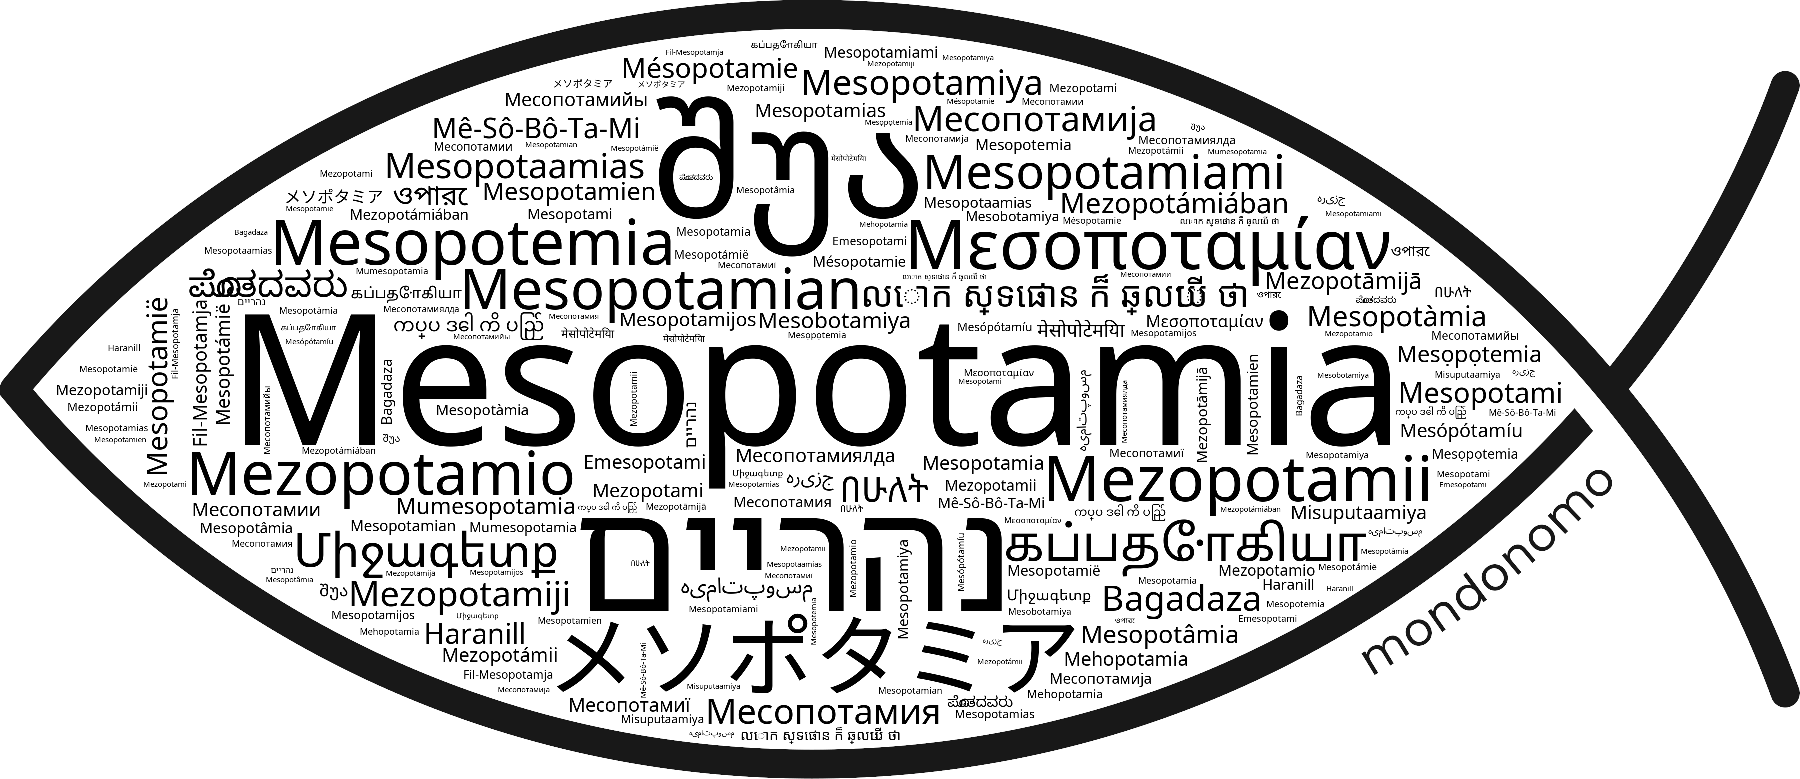 Name Mesopotamia in the world's Bibles